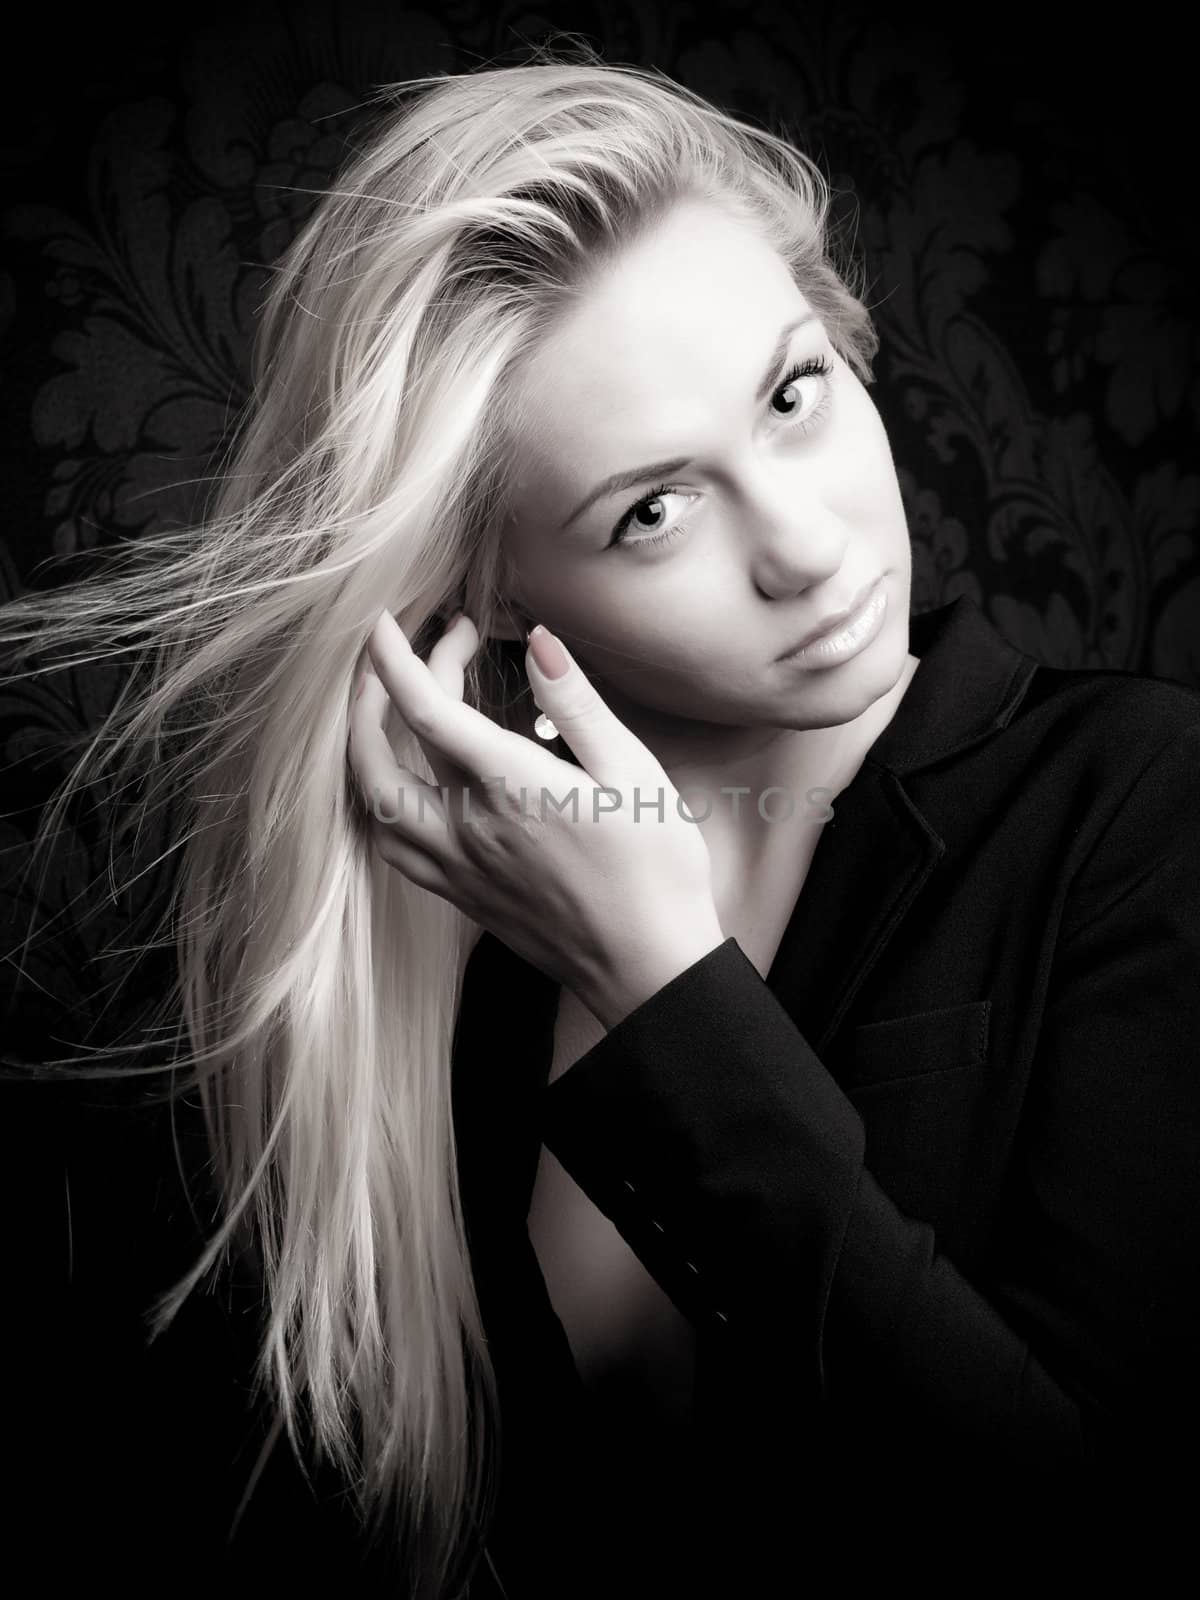 Blonde model stroking hair, black and white